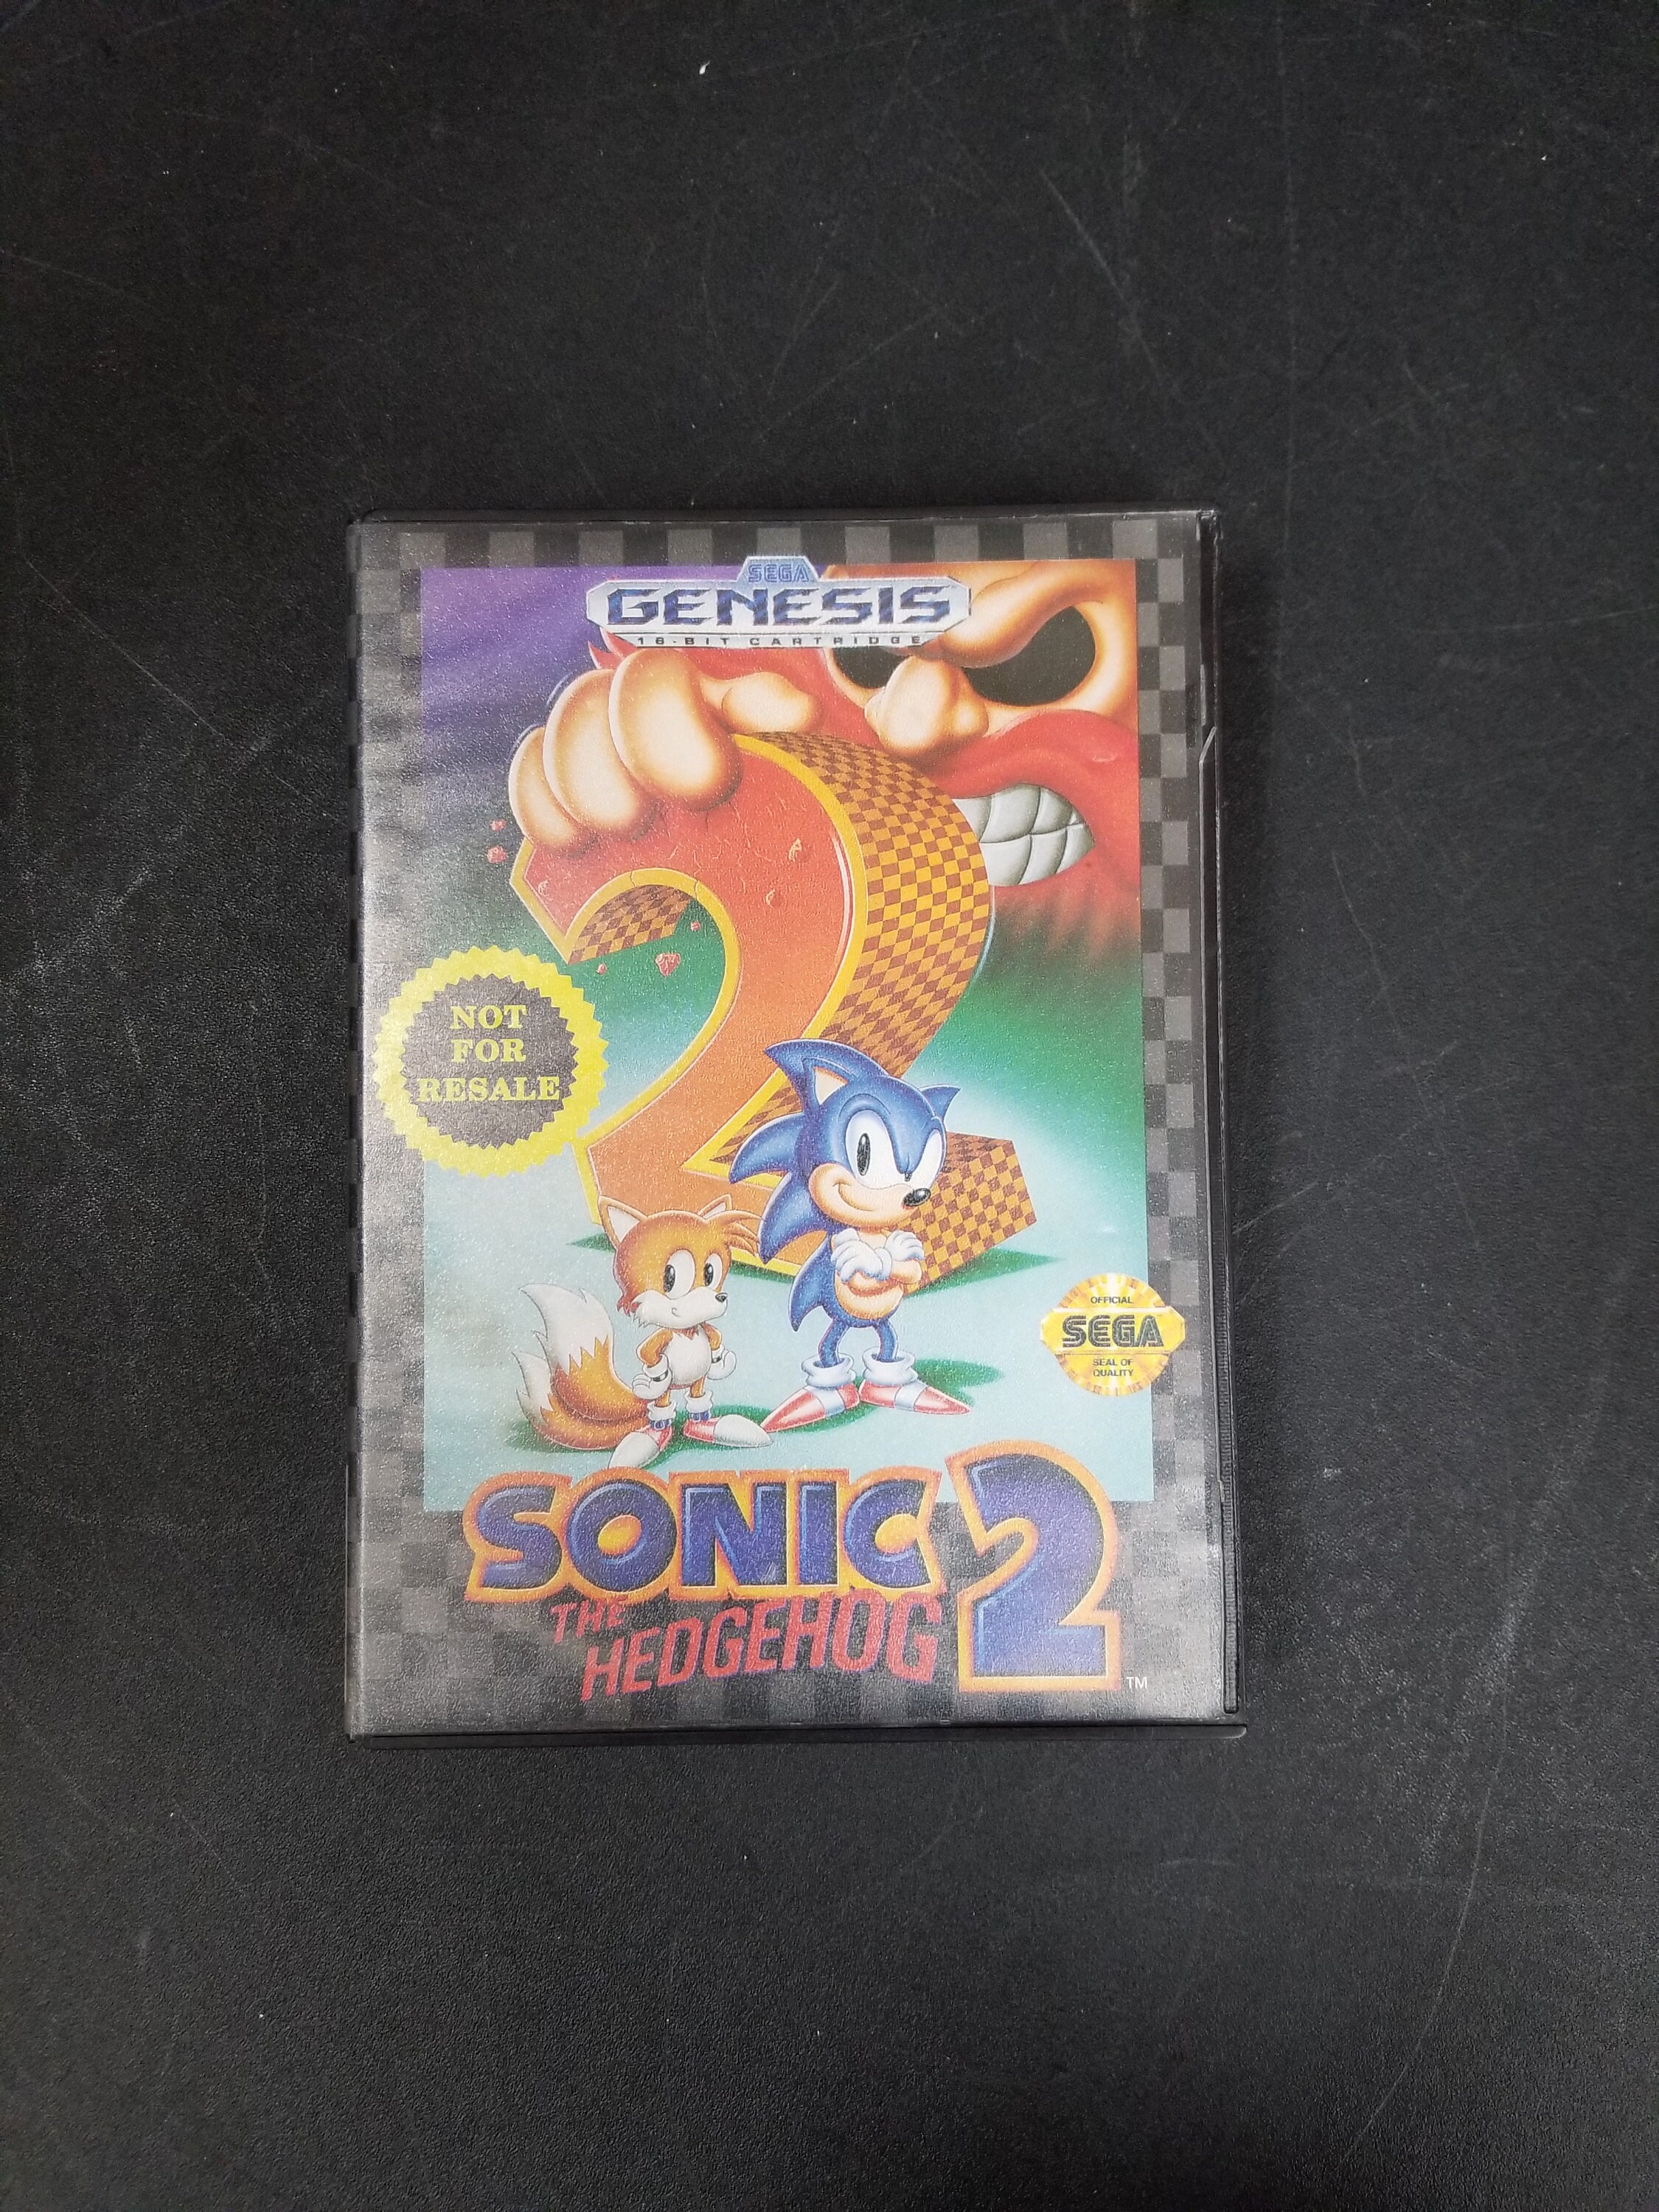 Sonic 2 Sega Genesis video game CIB nice condition